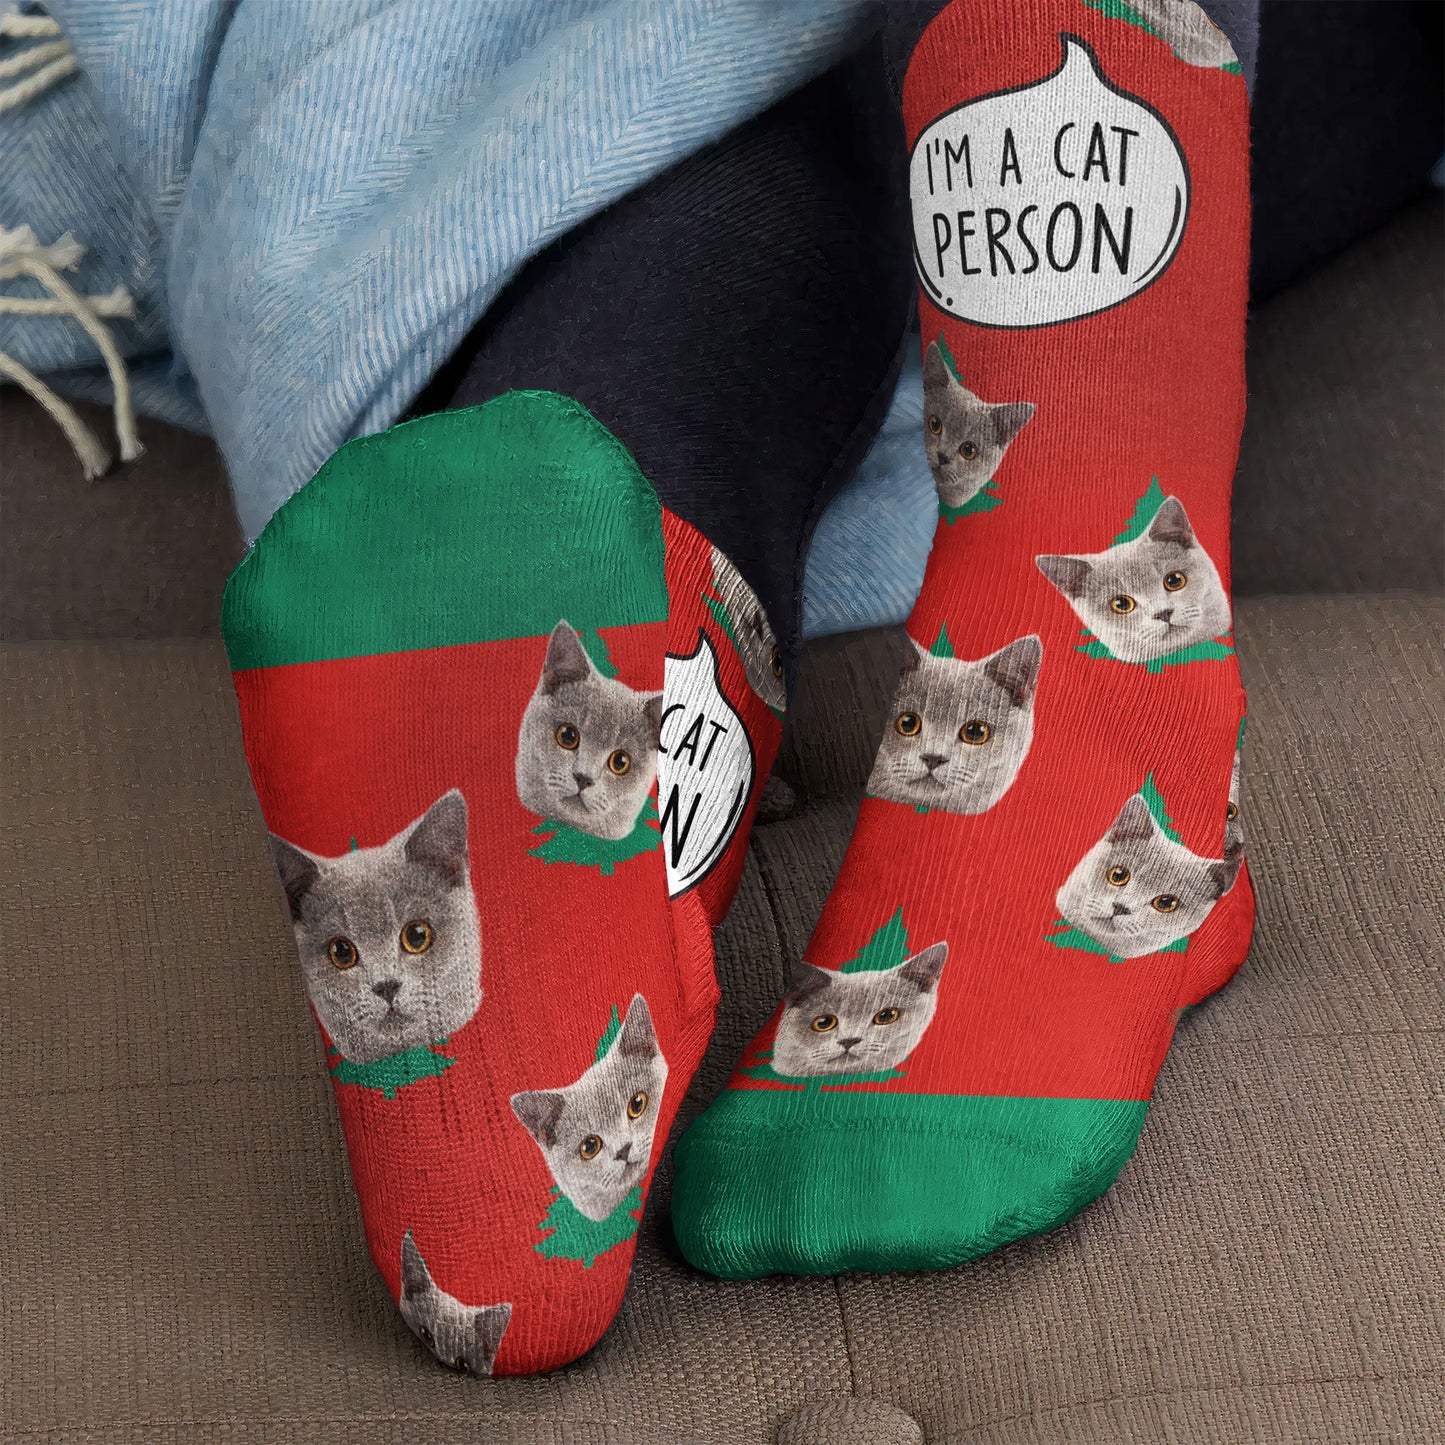 I'm A Cat Person - Personalized Photo Crew Socks